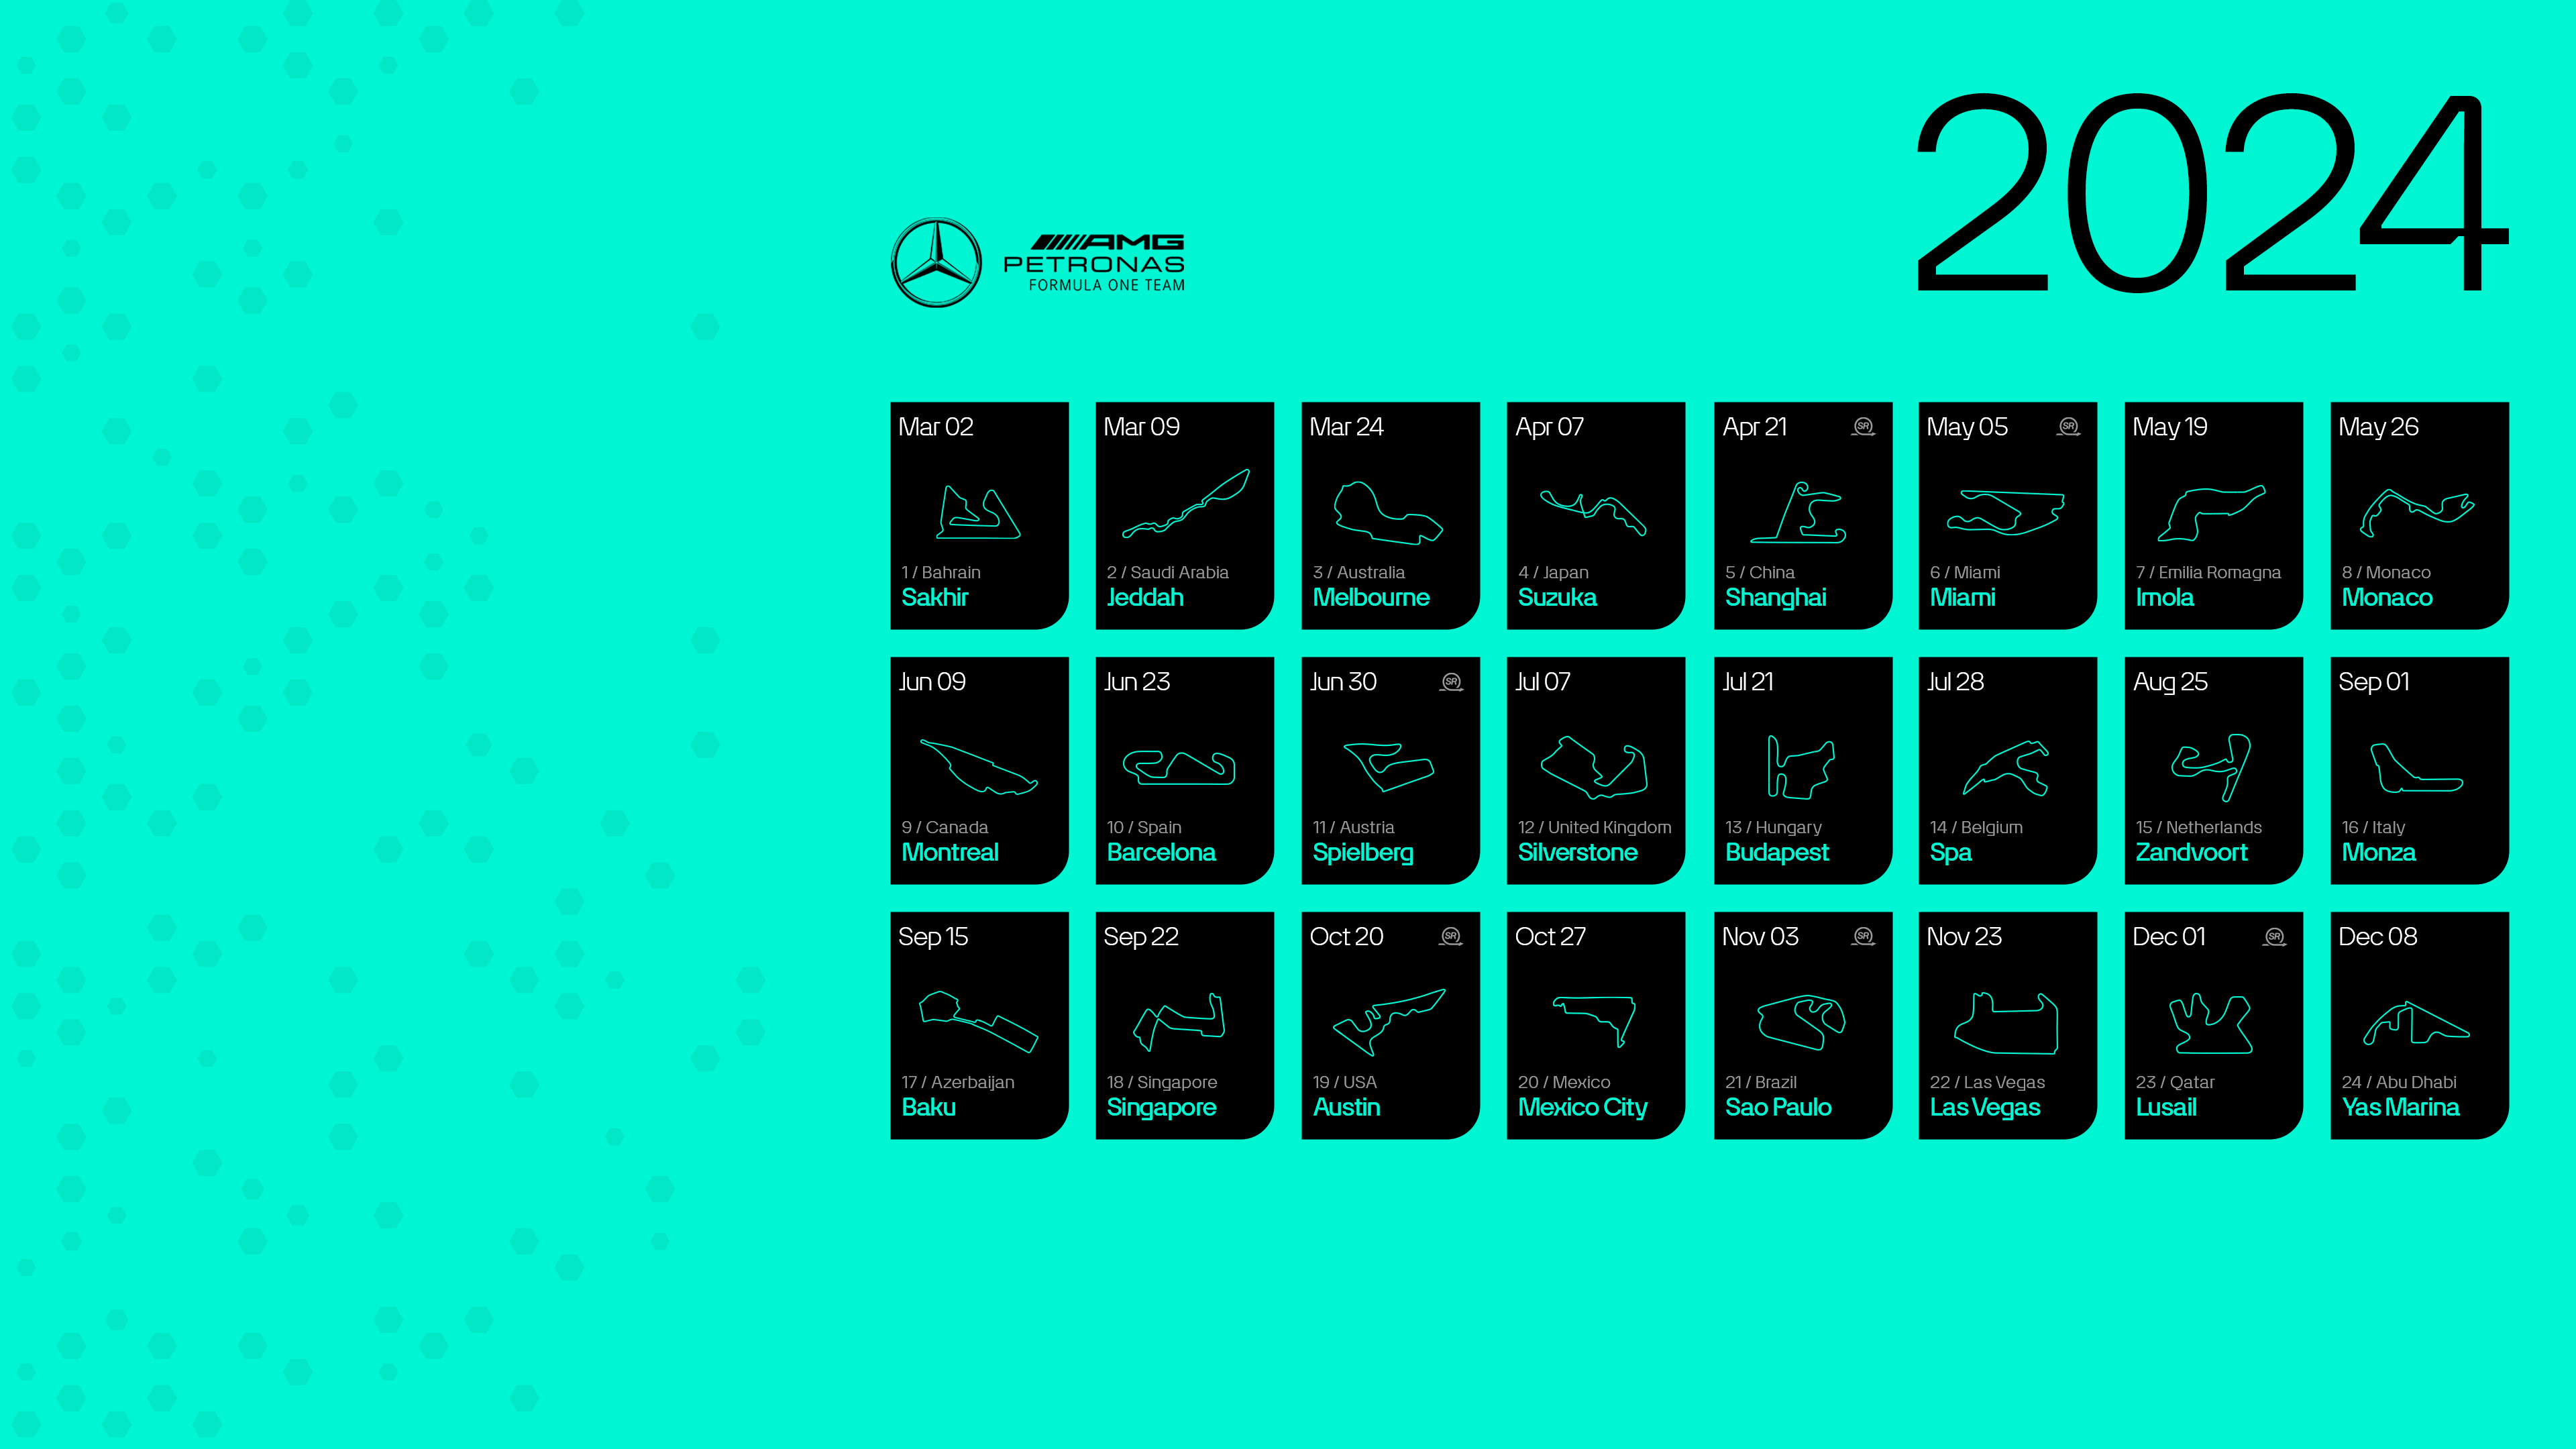 General 3840x2160 Mercedes F1 map Formula 1 calendar simple background logo digital art 2024 (year) teal background month numbers